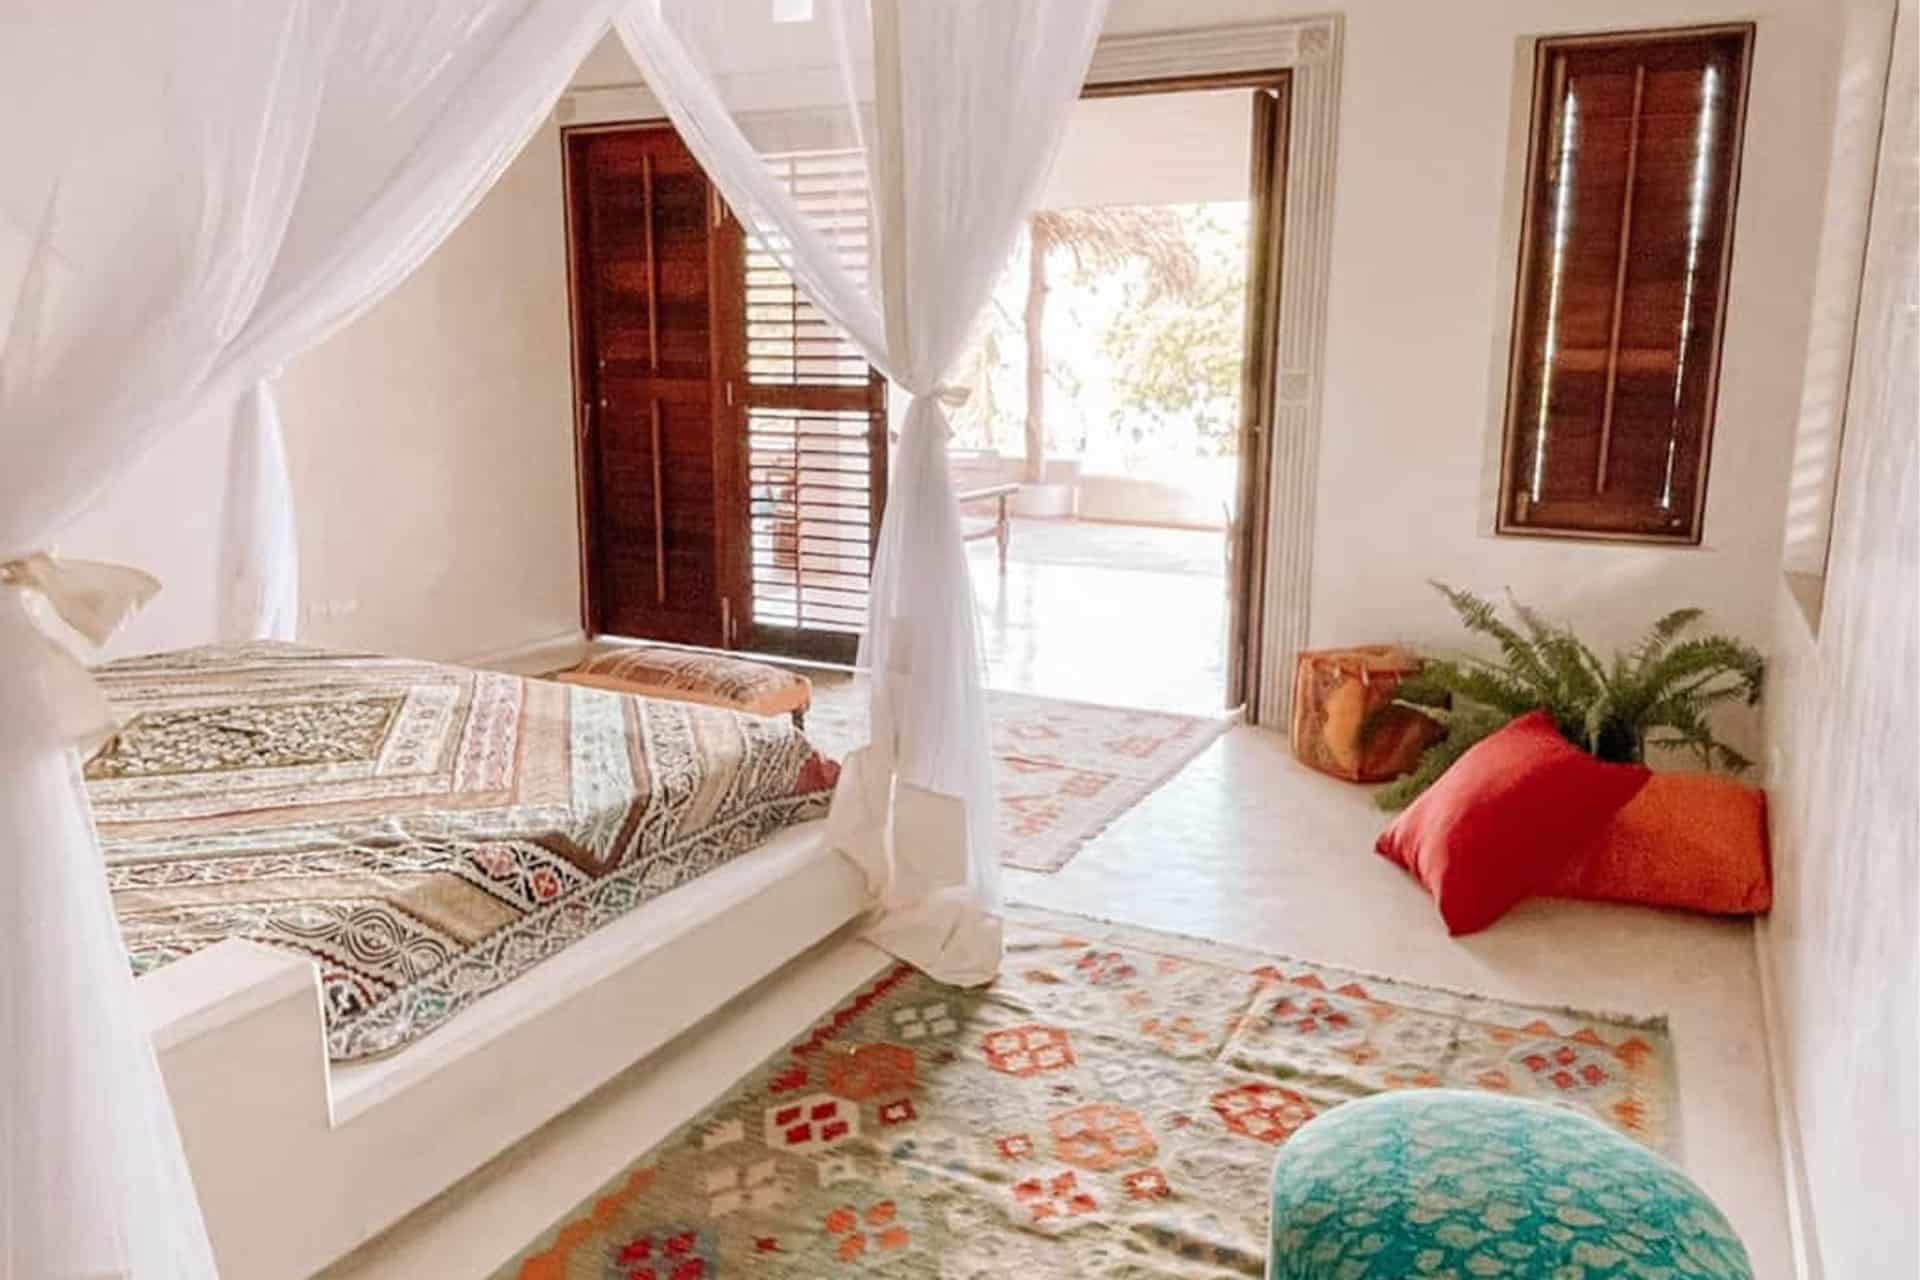 A bedroom at Cardamom House in Kenya.